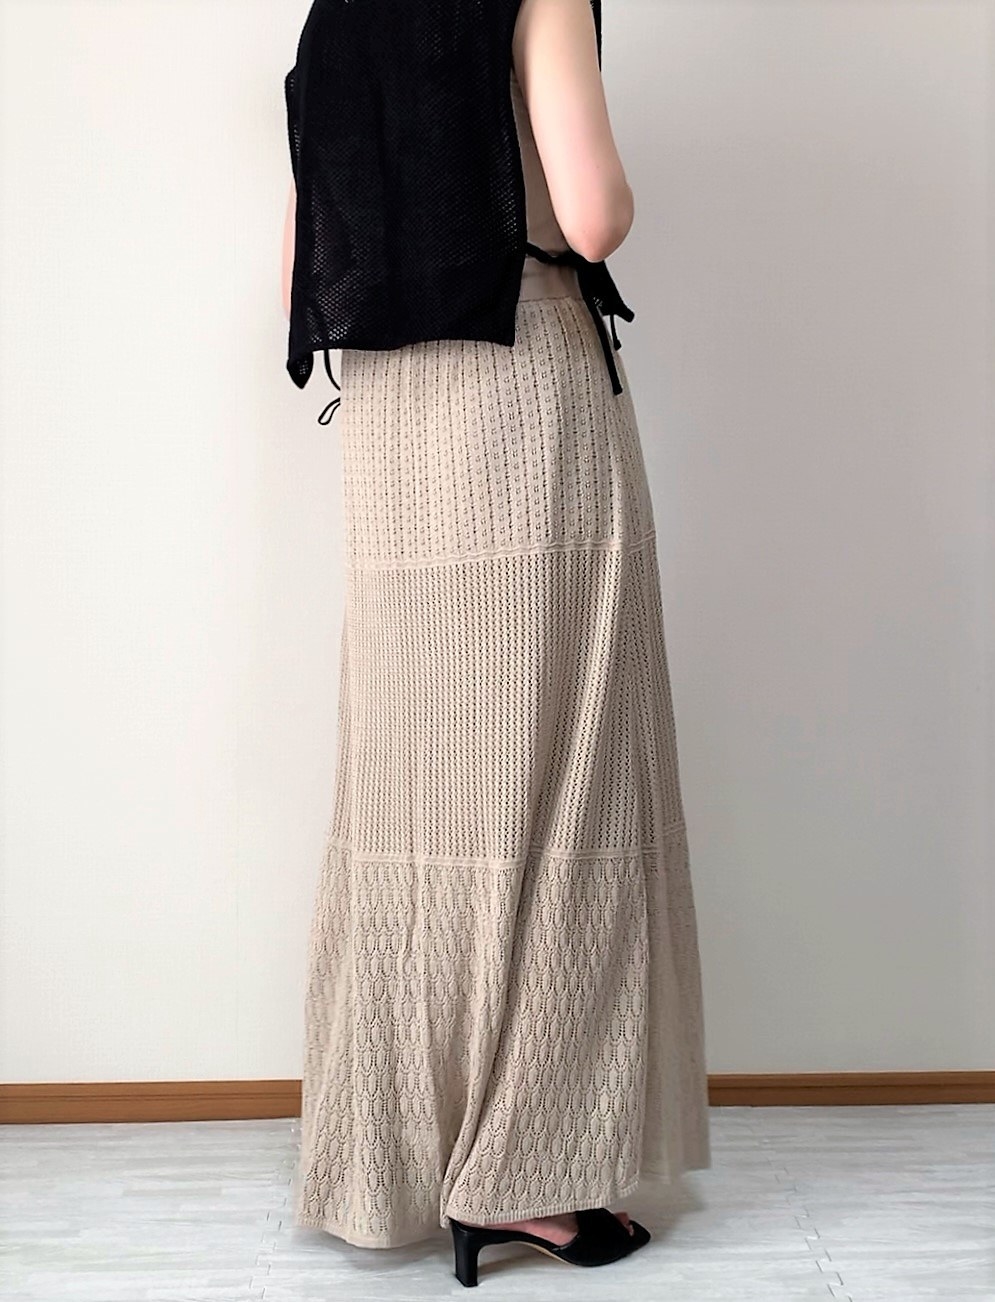 GLOBAL WORK（グローバルワーク）のオススメレディースファッション「透かし編みマーメイドスカート」のコーディネート